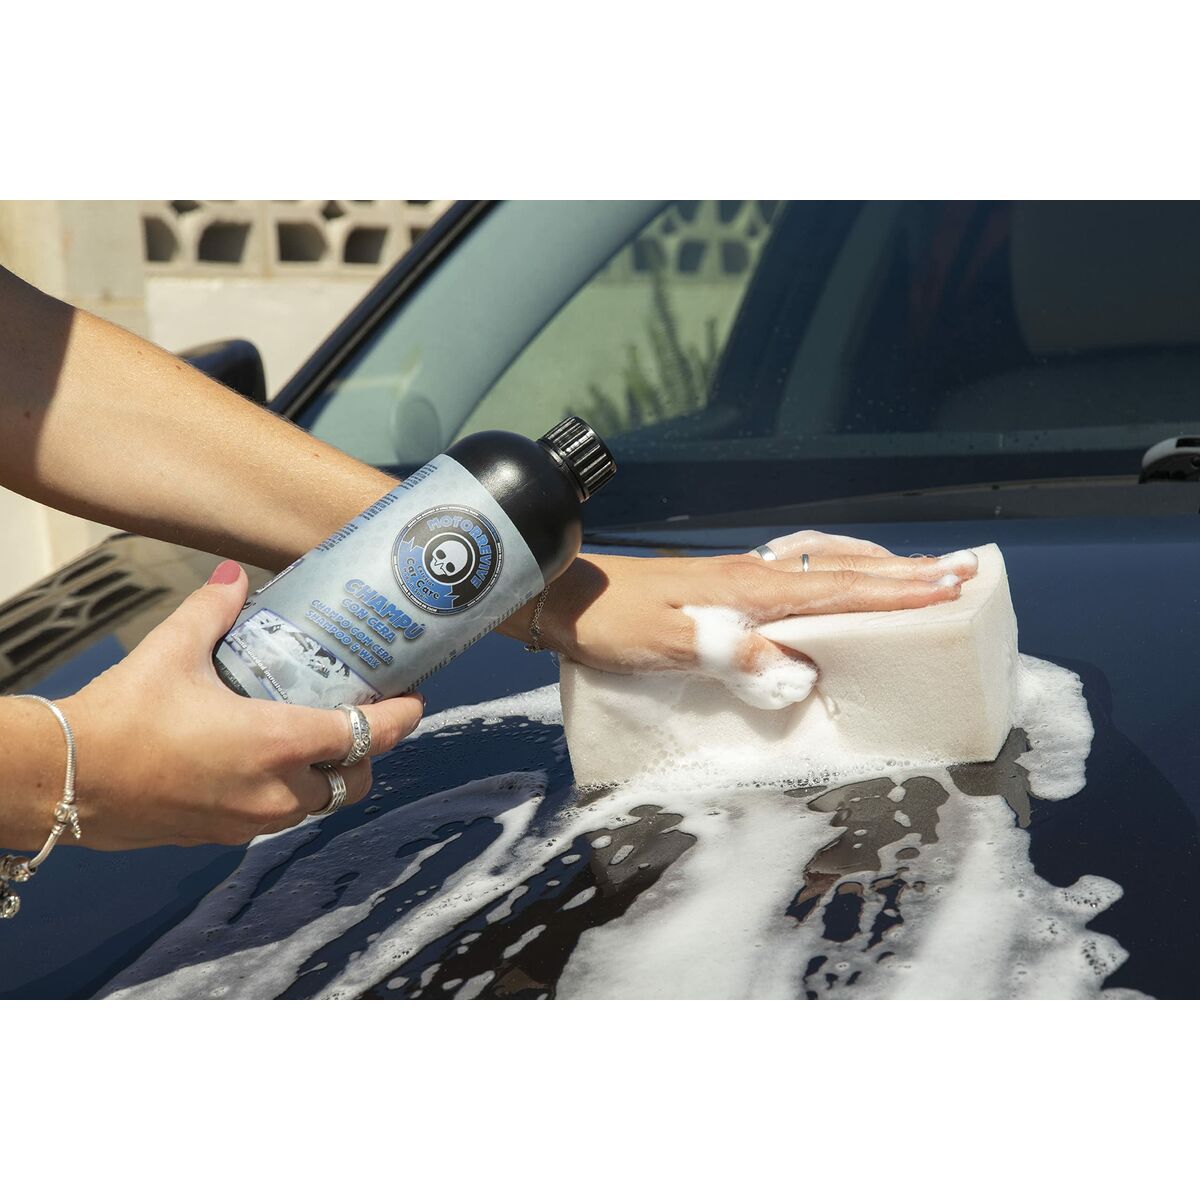 Detergente para automóvel Motorrevive Cera 500 ml